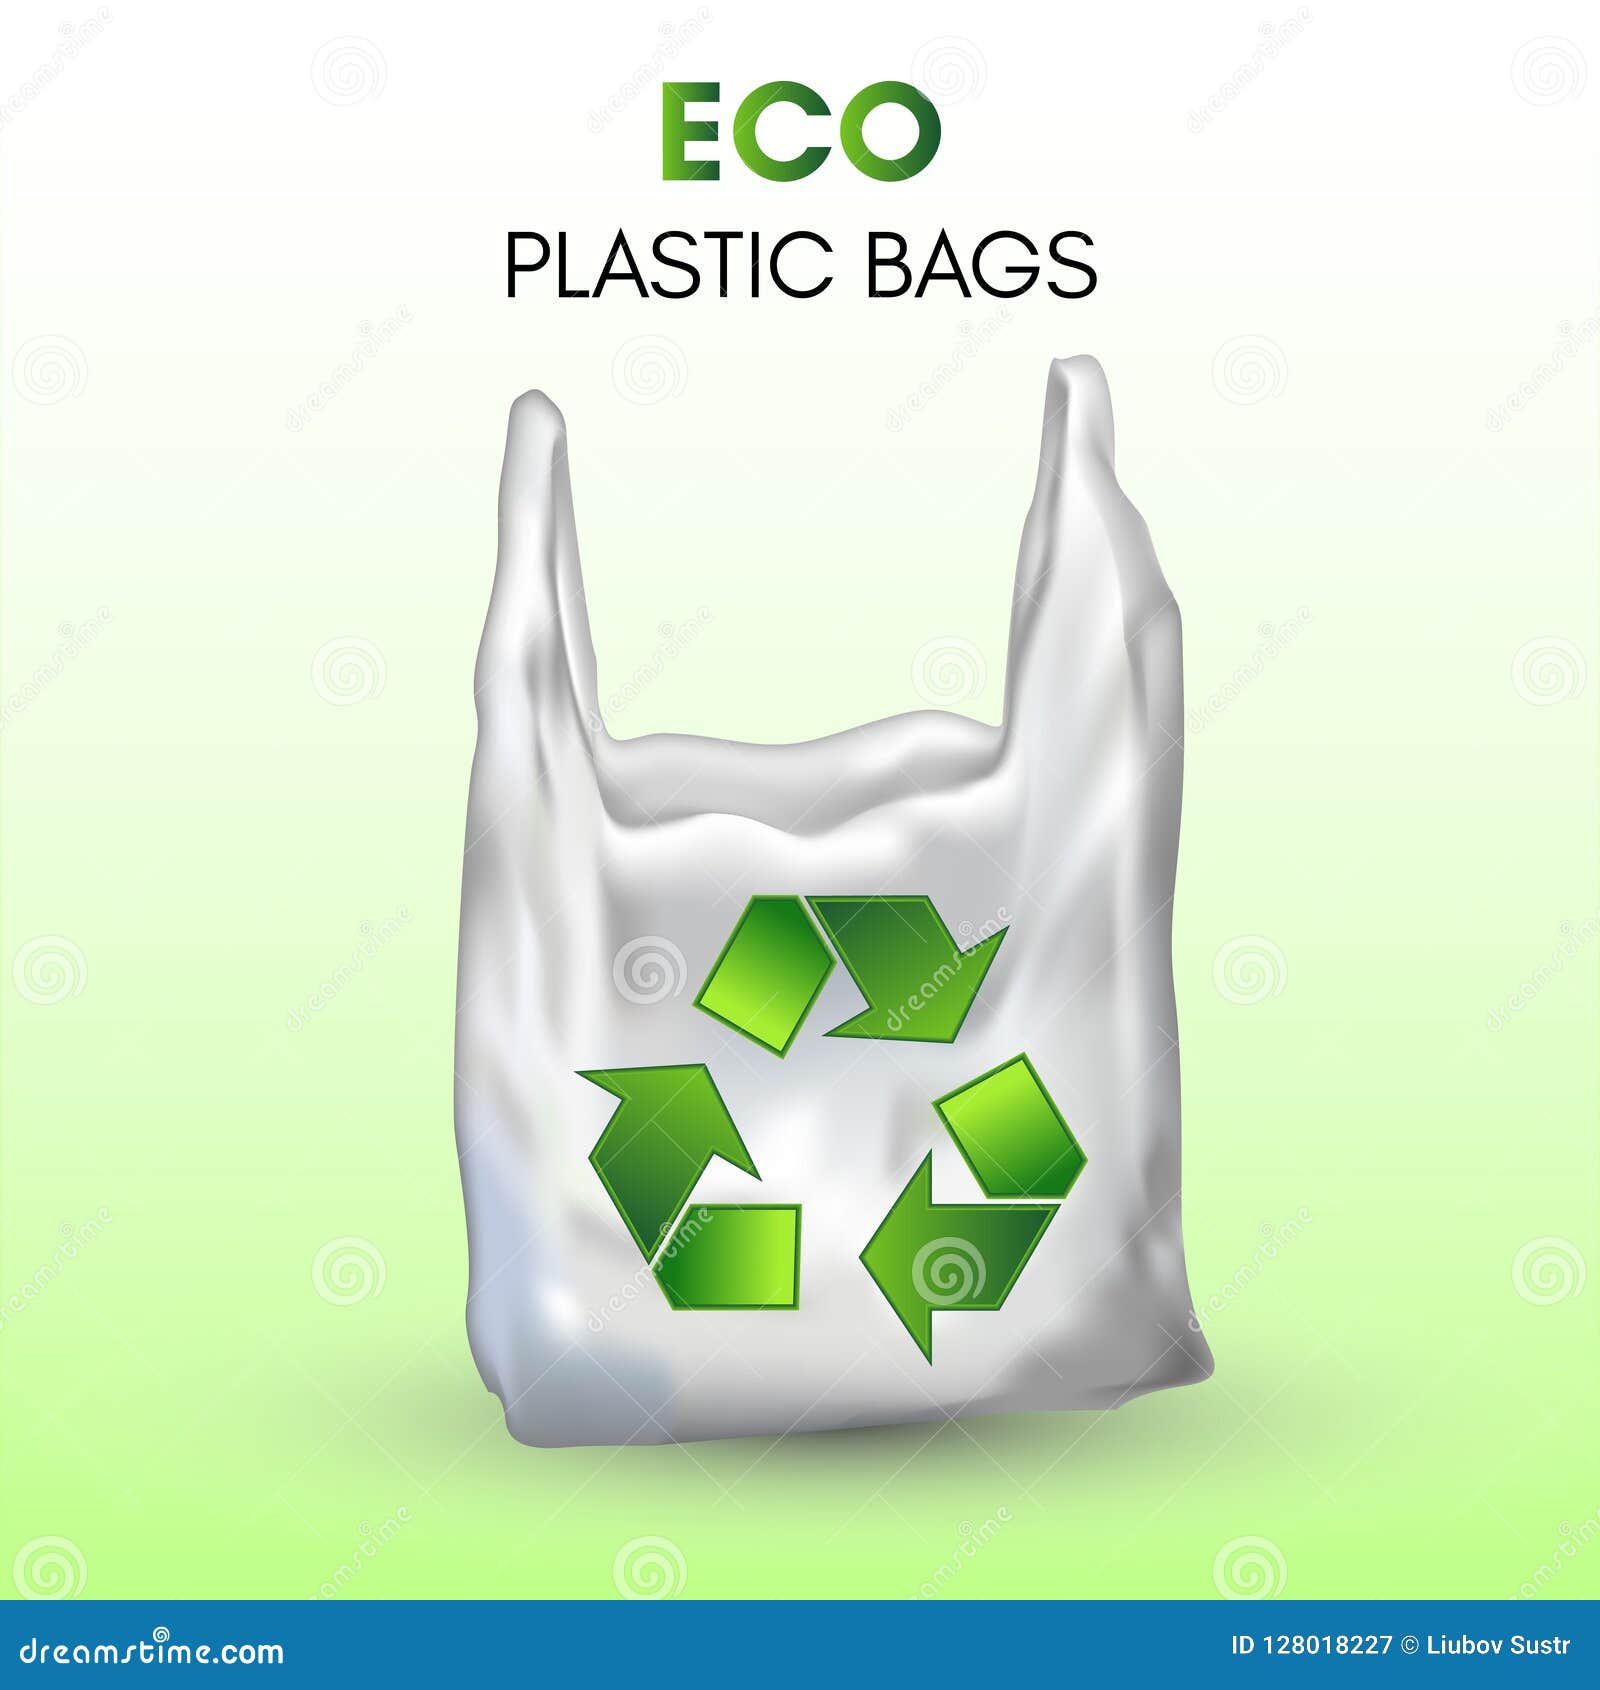 Rotary Club recycling plastic bags with schools, Publix | News |  hometownnewstc.com